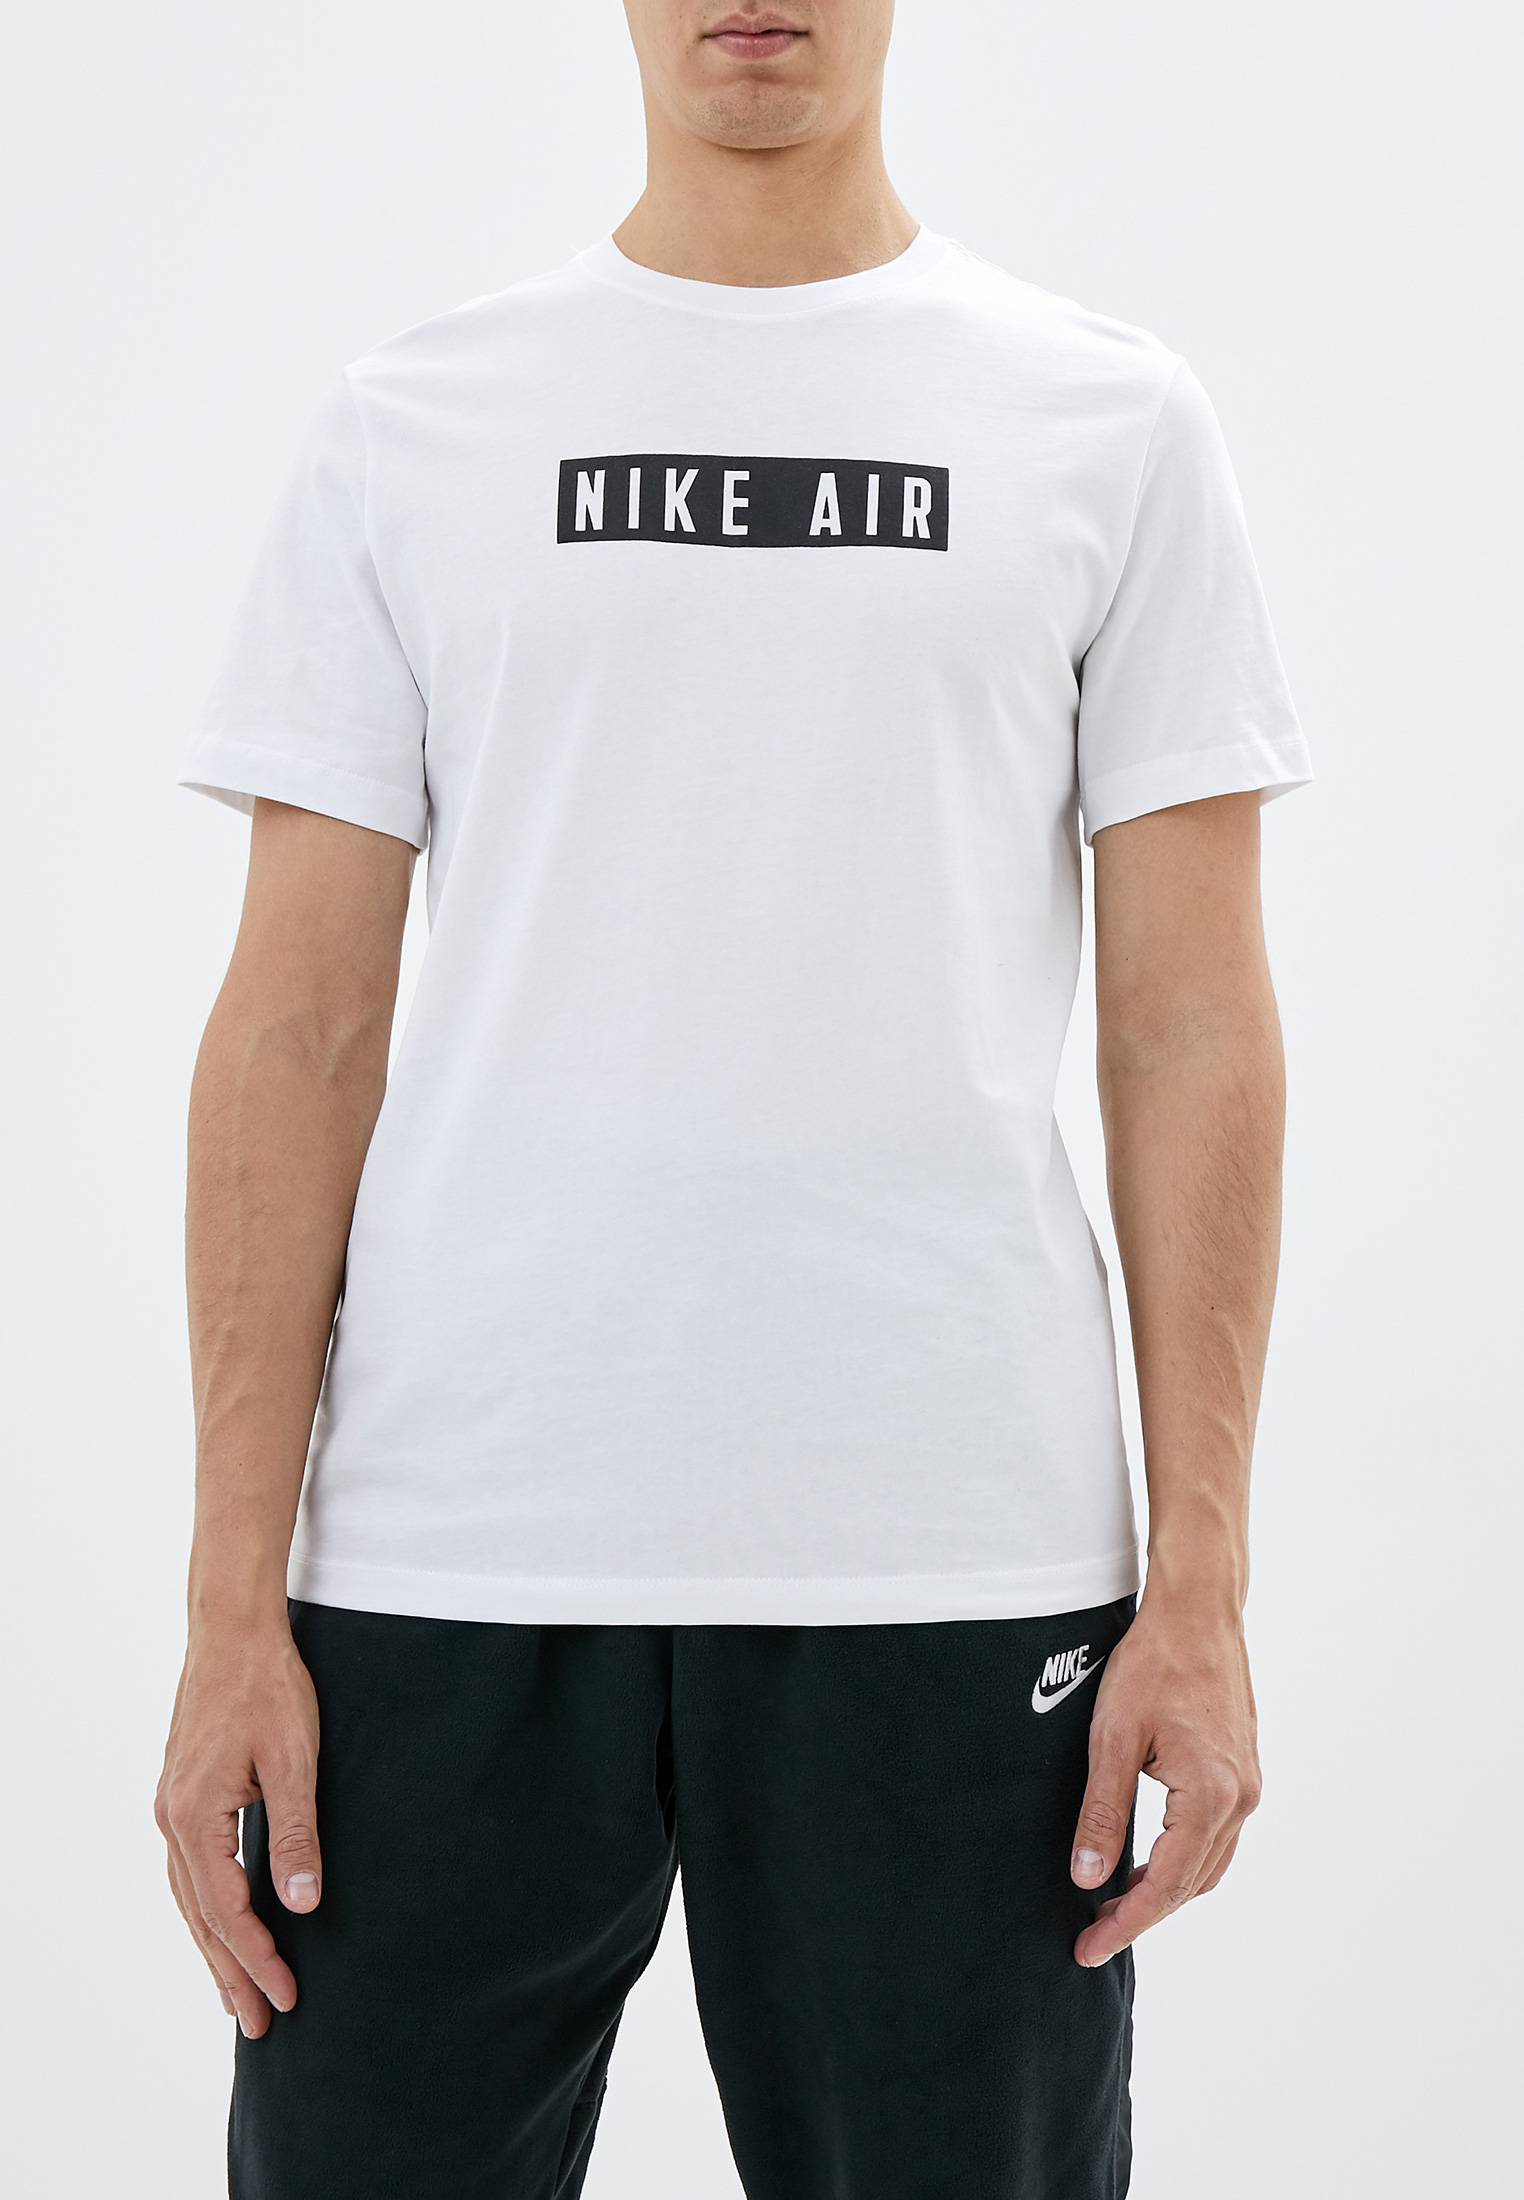 Купить футболку на ламоде. Футболка найк АИР белая. Nike Air футболка мужская. Футболка мужская белая Air. Найк футболка цвета.